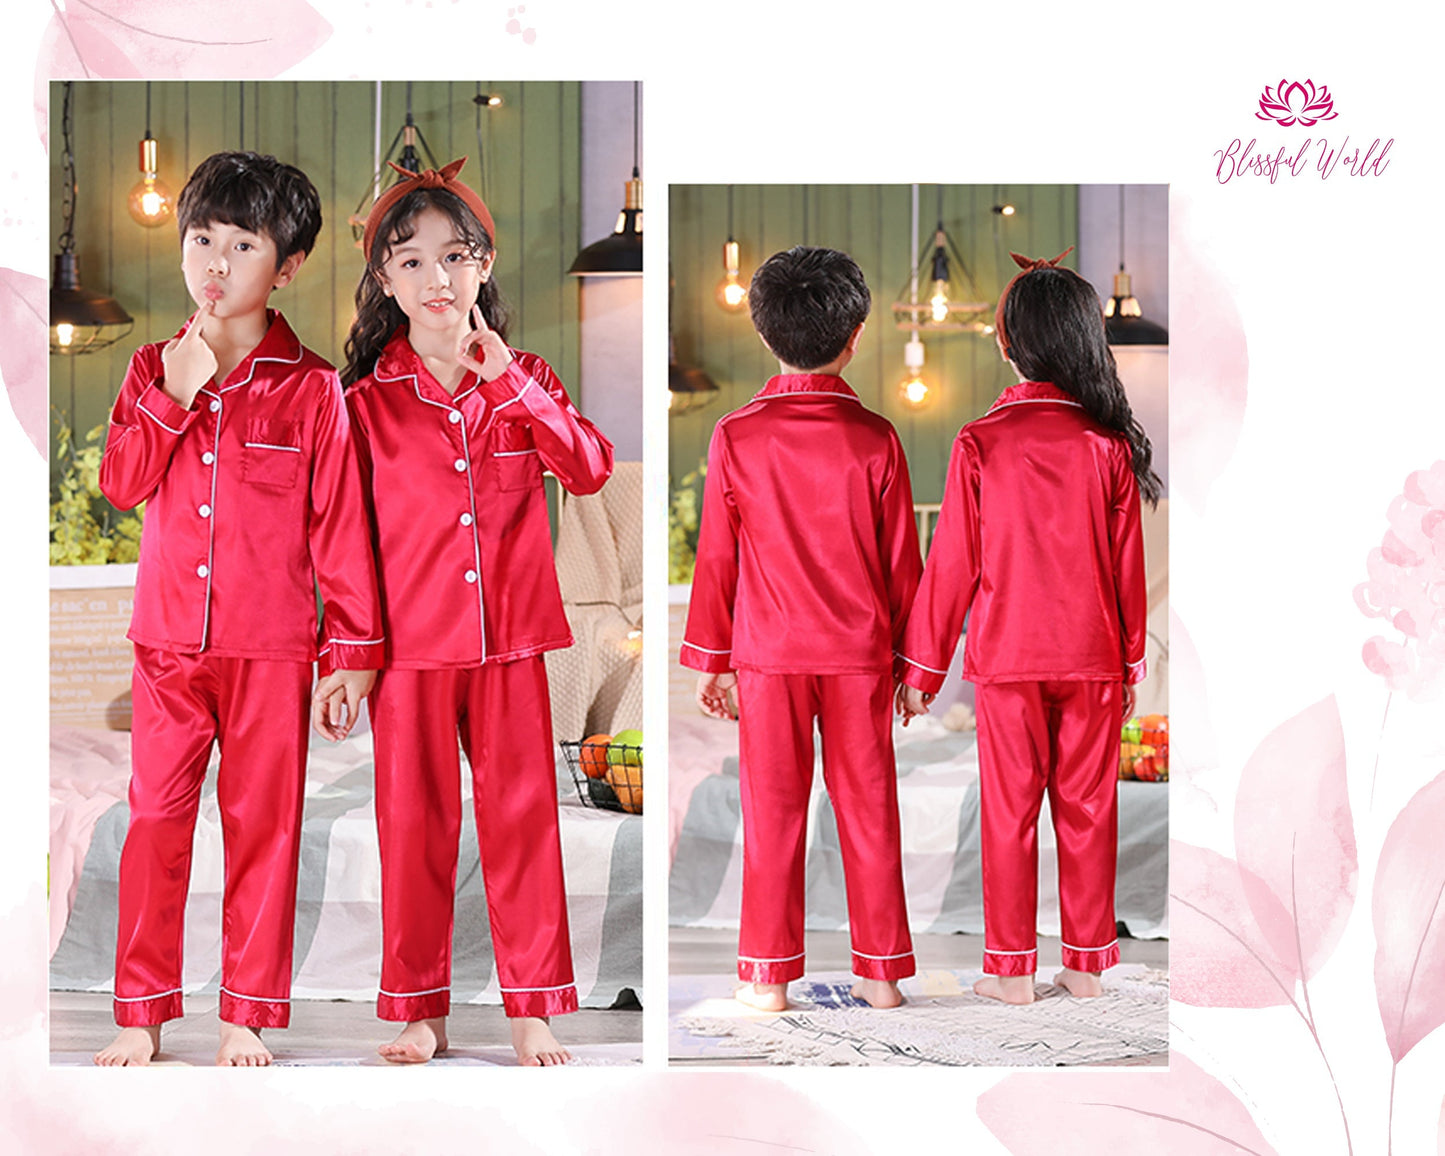 Organic Linen 2PC Kid’s Sleepwear Pajama Set / Family Look Personalized Women Men Kids Pajamas Set pyjama kids pjs satin shirt